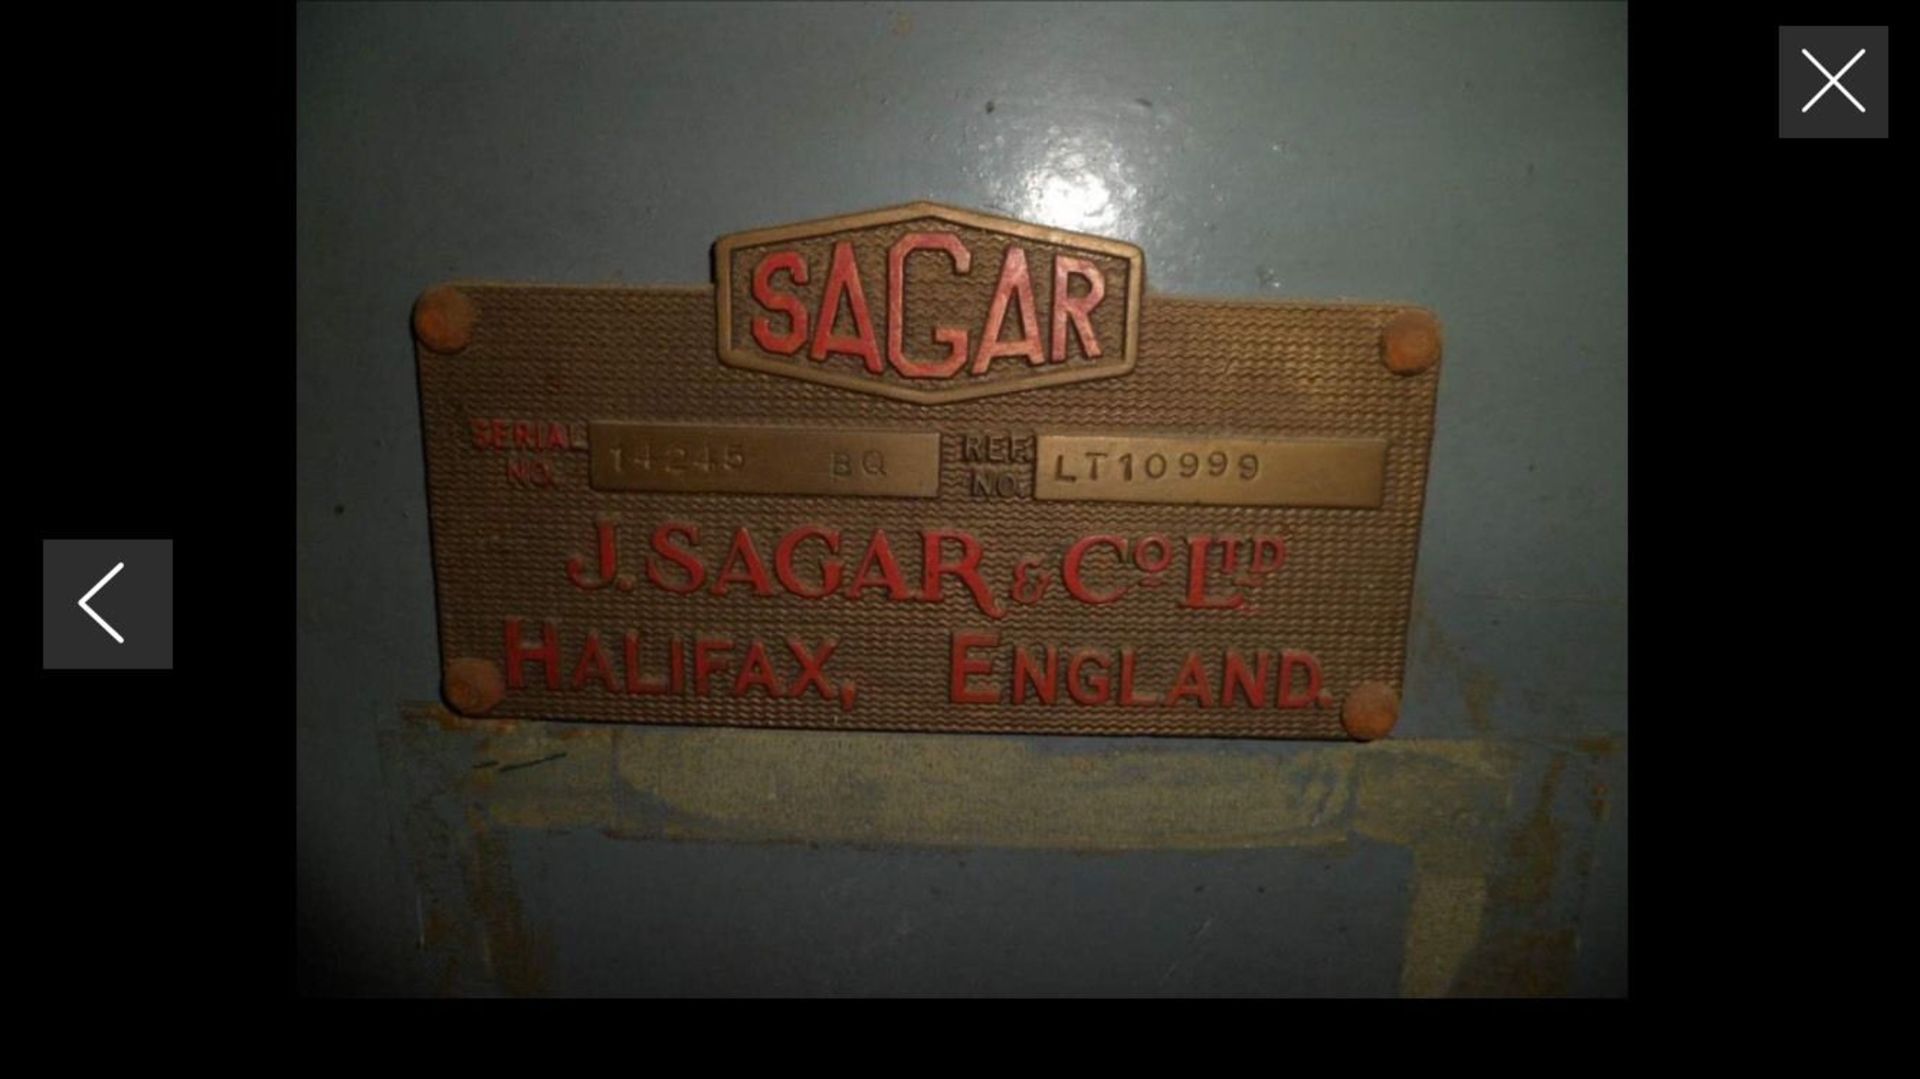 Sagar Rip Saw, Heavy Duty Large Capacity Saw - Image 5 of 6